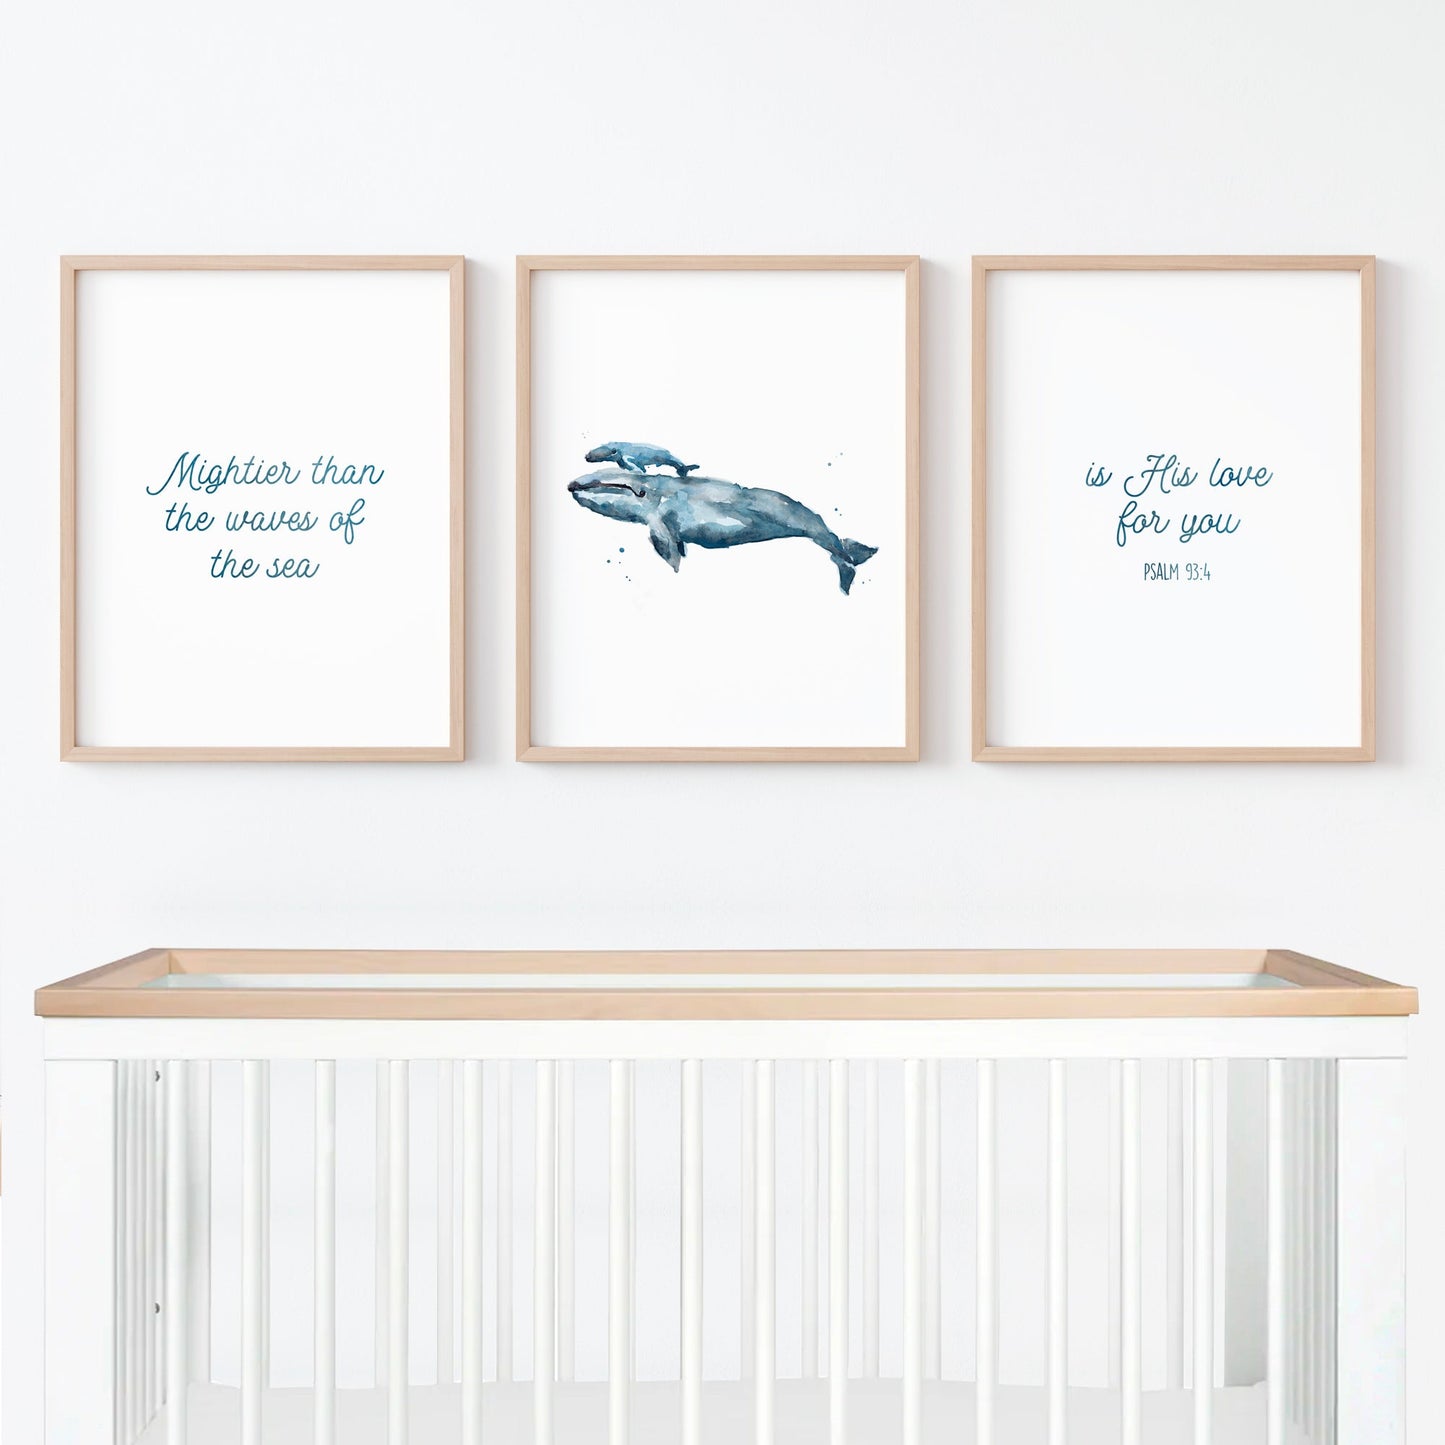 Mightier Than The Waves - Whale Ocean Nursery Art Prints - Psalm 93:4 Art - Nursery Bible Verse Prints - Moon Rock Prints